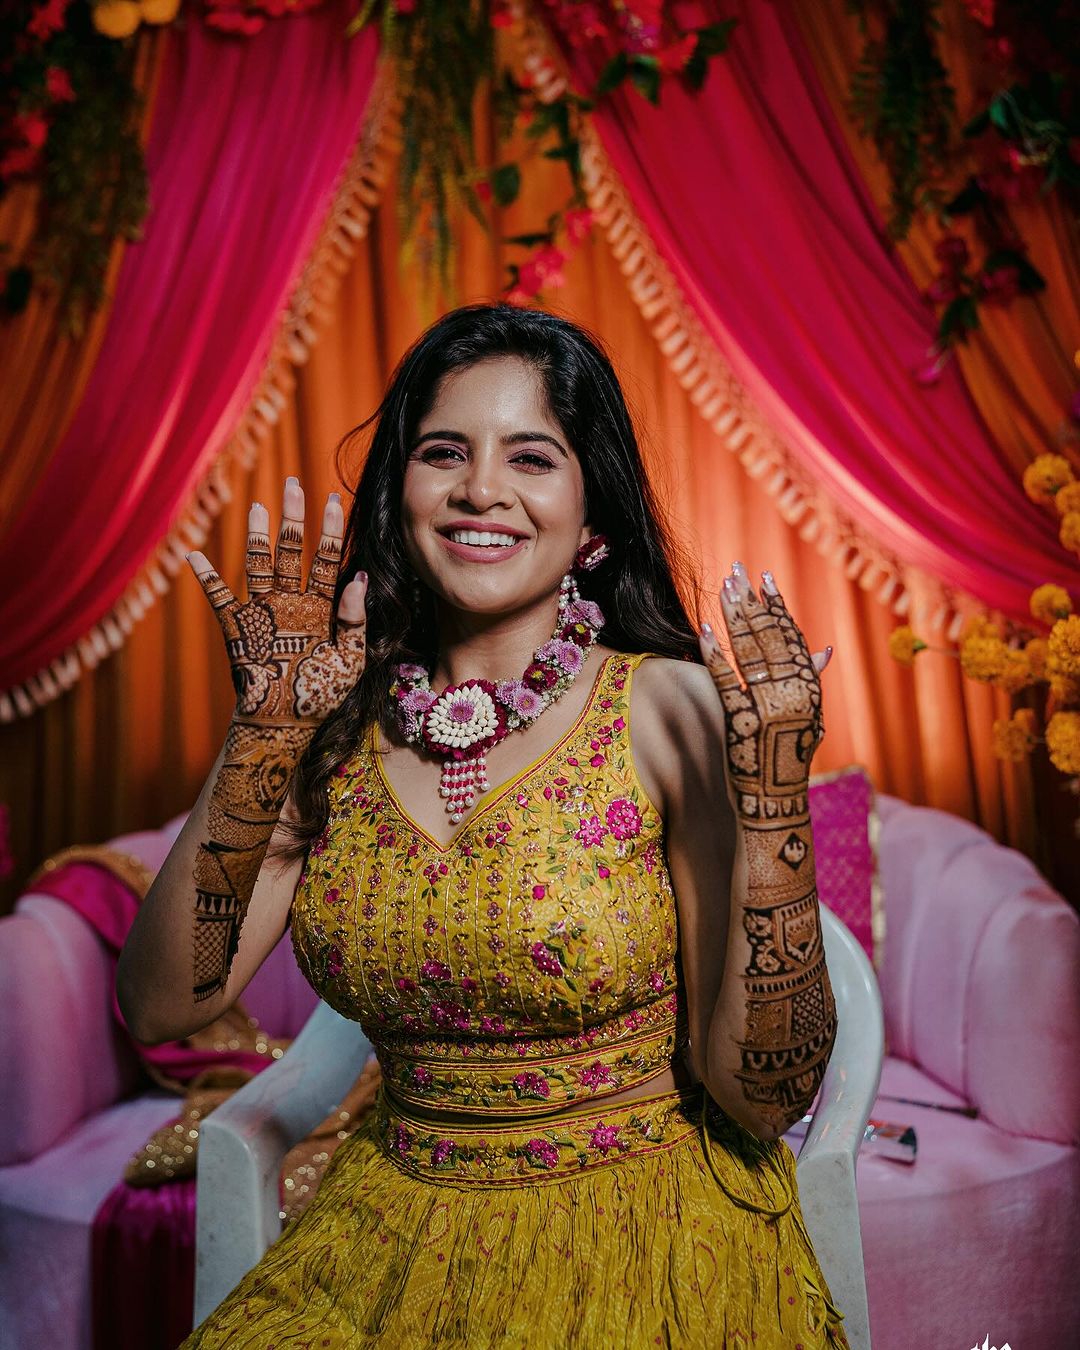 Mehndi Bride | Lal Qila, Manchester | Asim Shahzad | Flickr